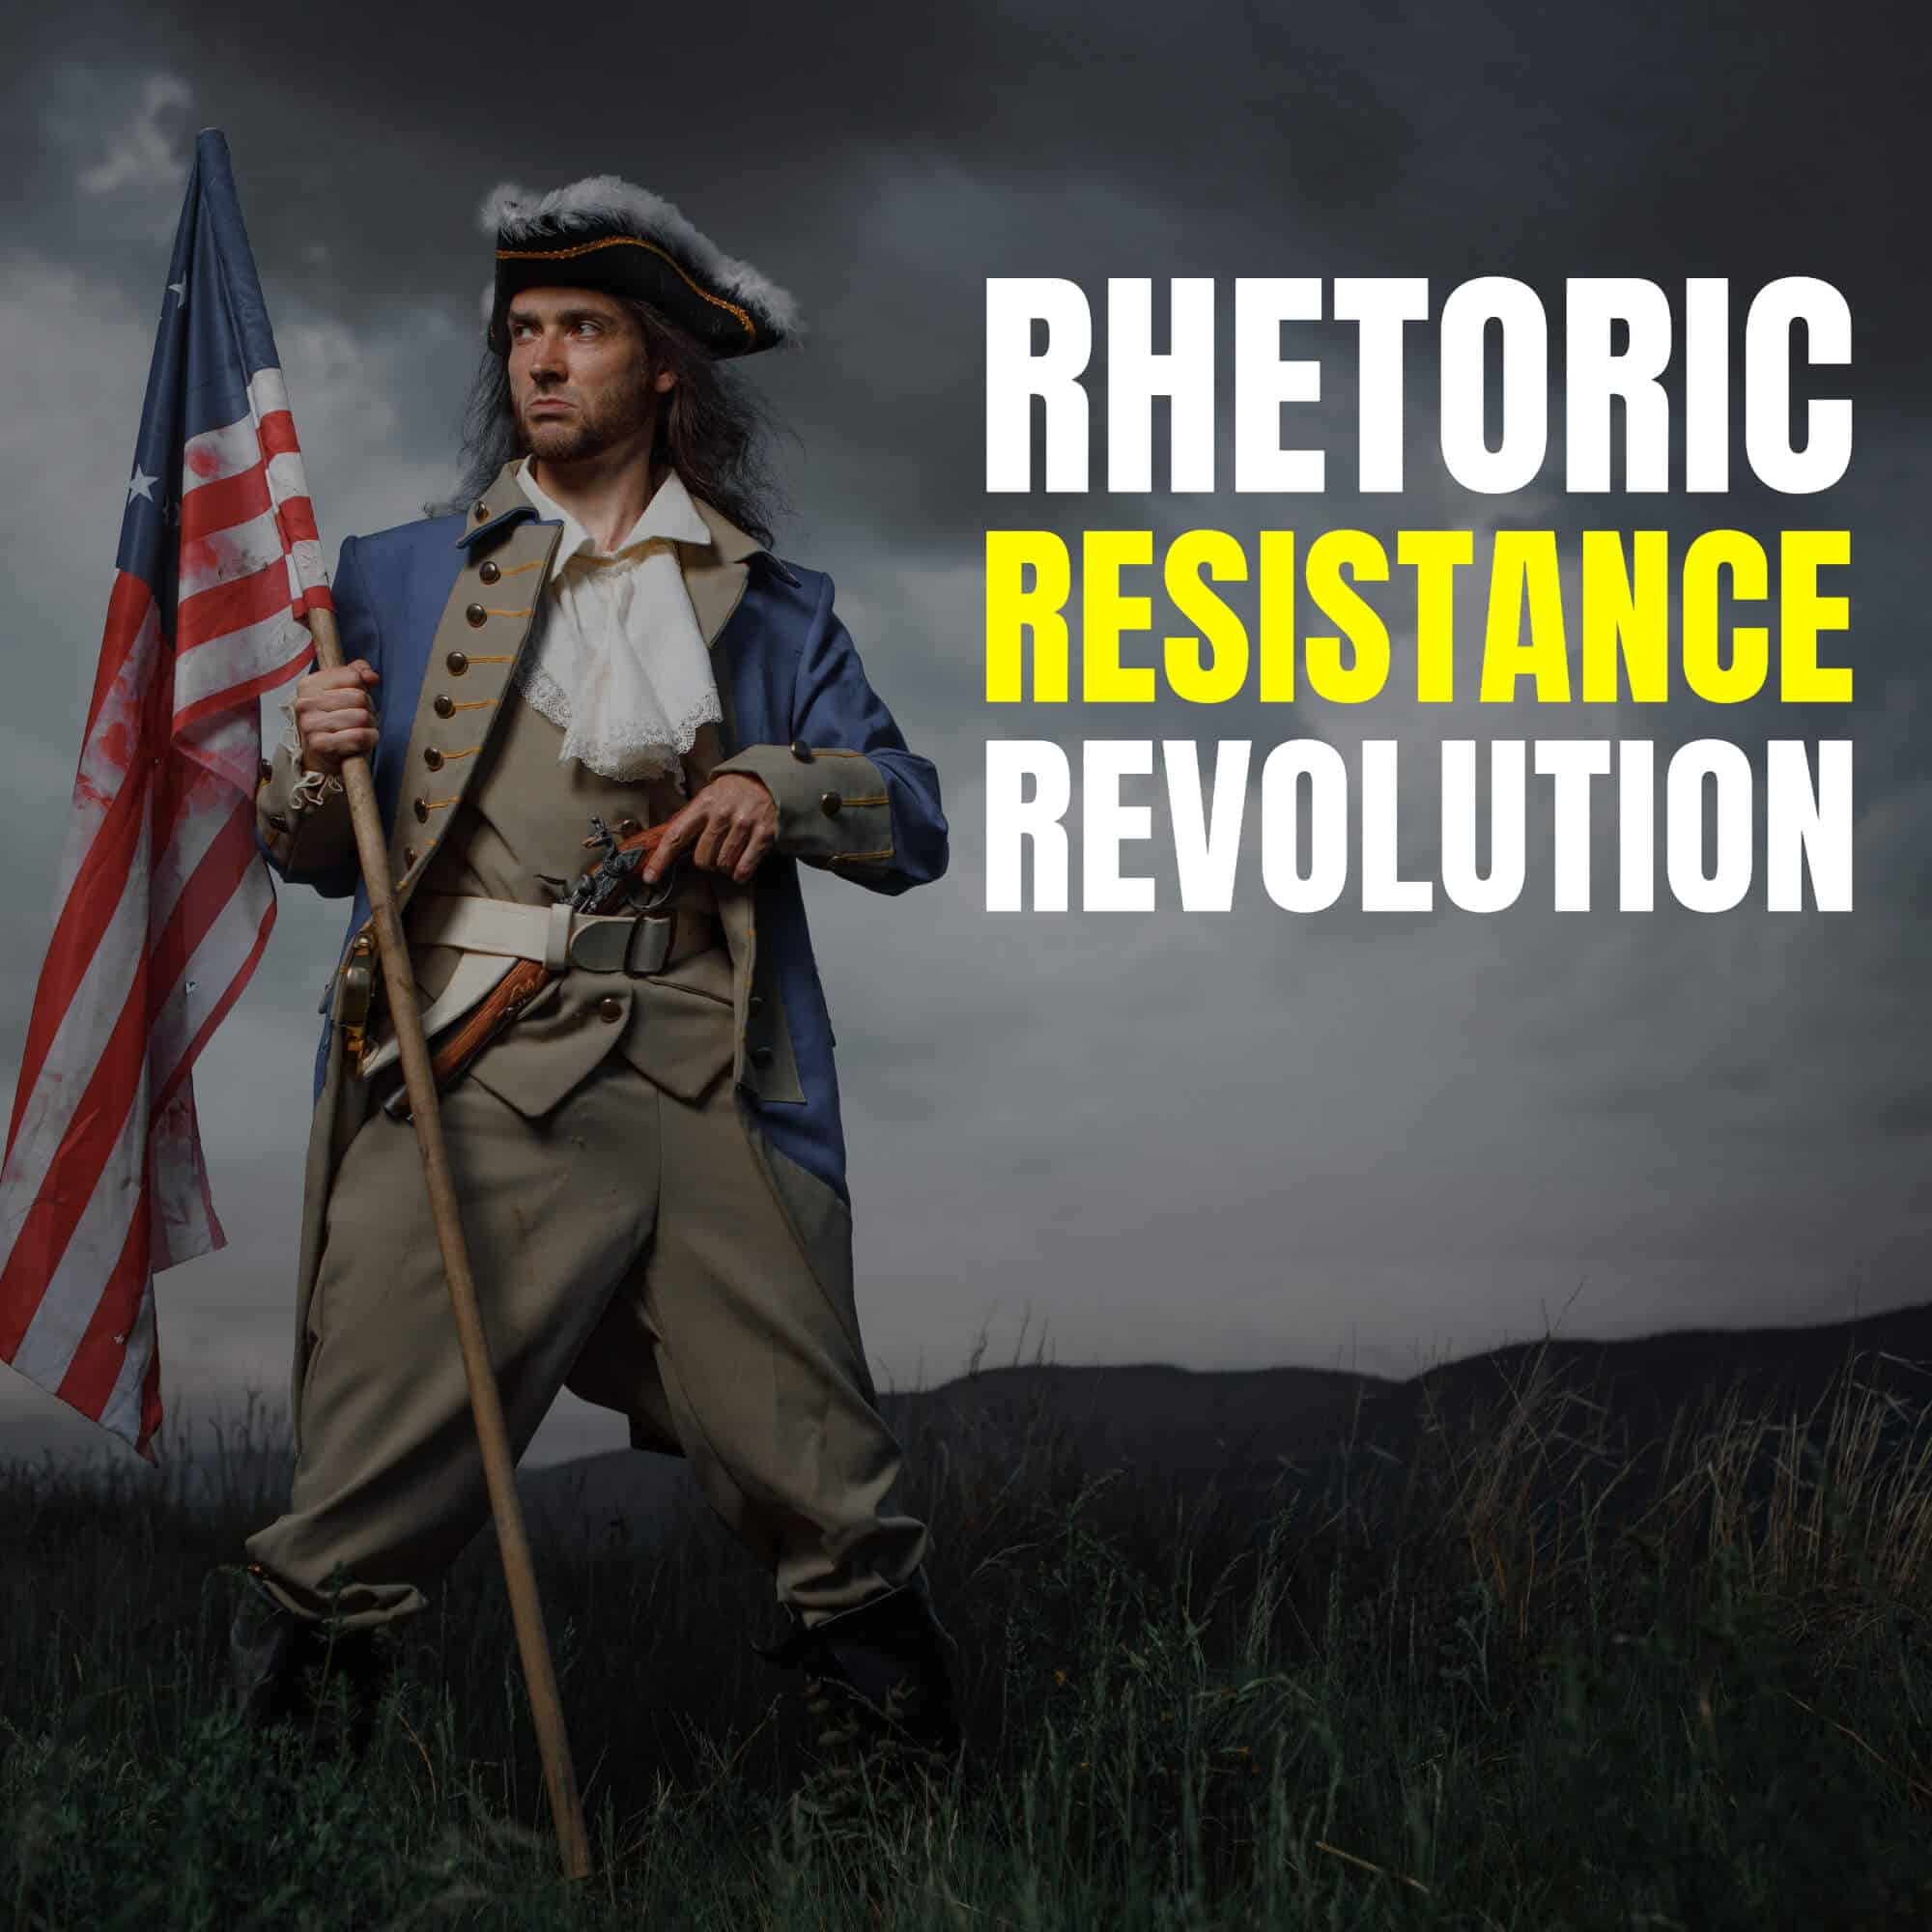 Blueprint: Rhetoric, Resistance and the Revolution